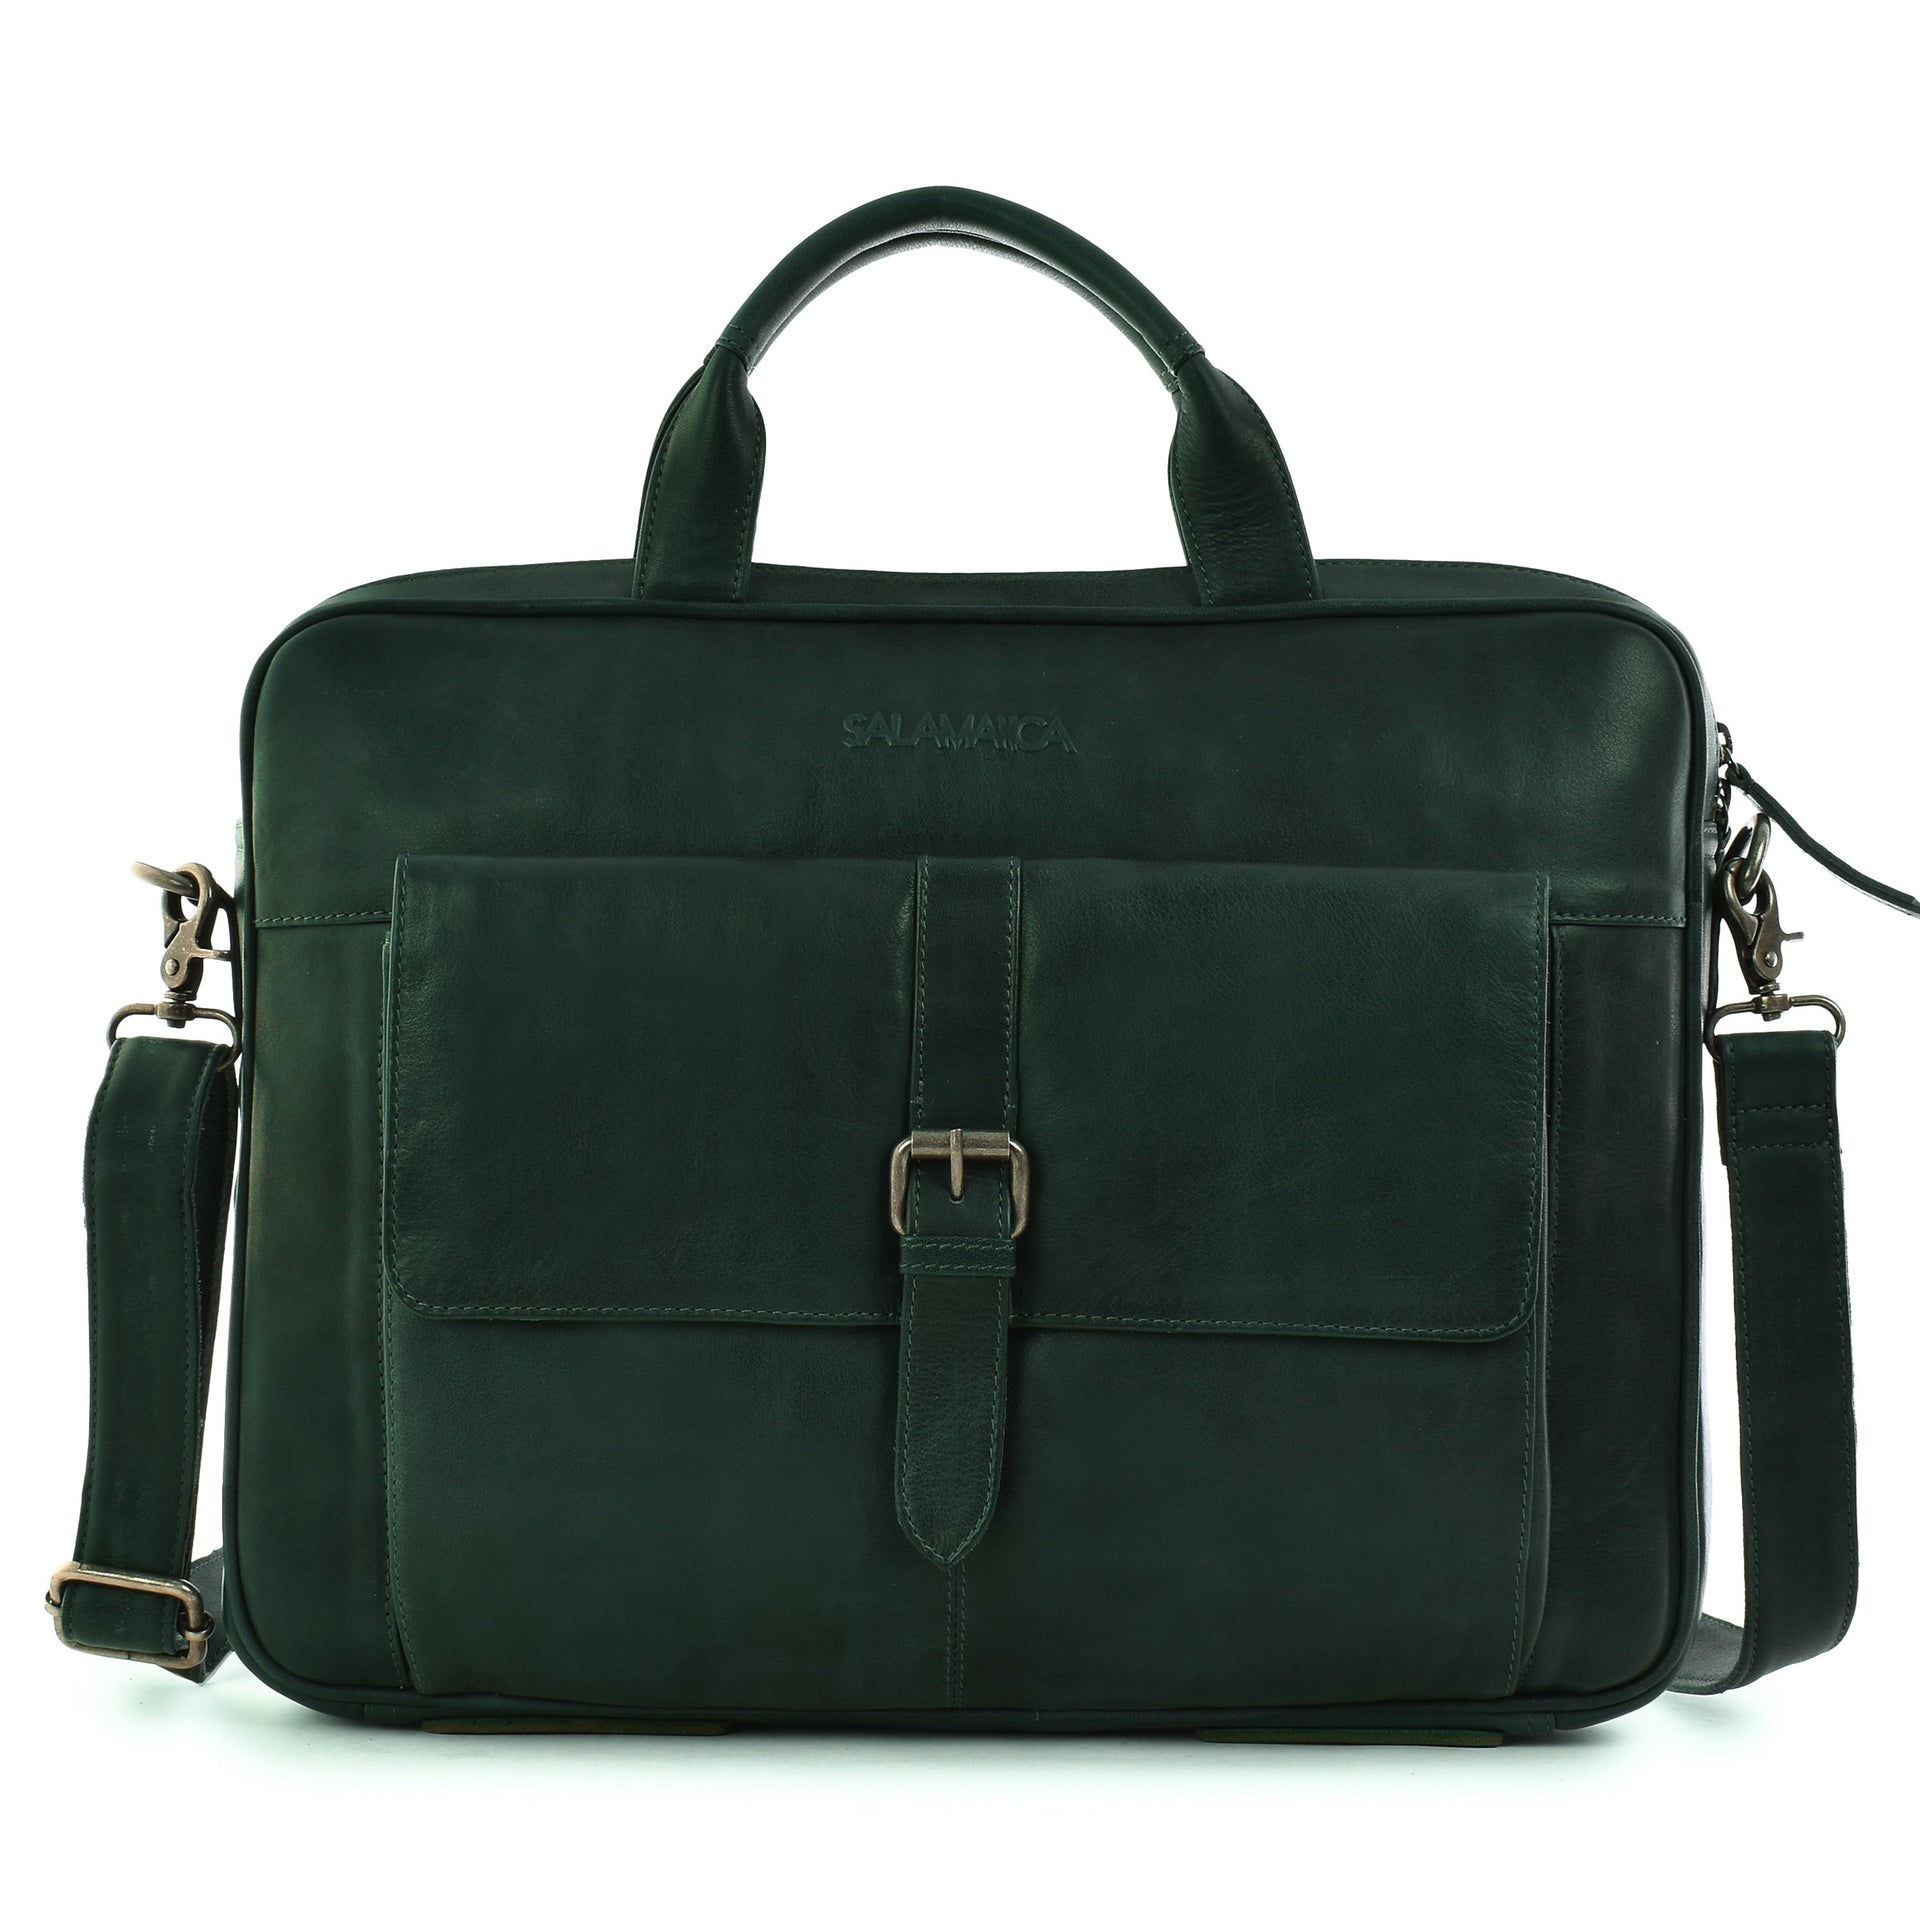 Harrison Business Bag - Ponderosa Pine - Laptop Bags